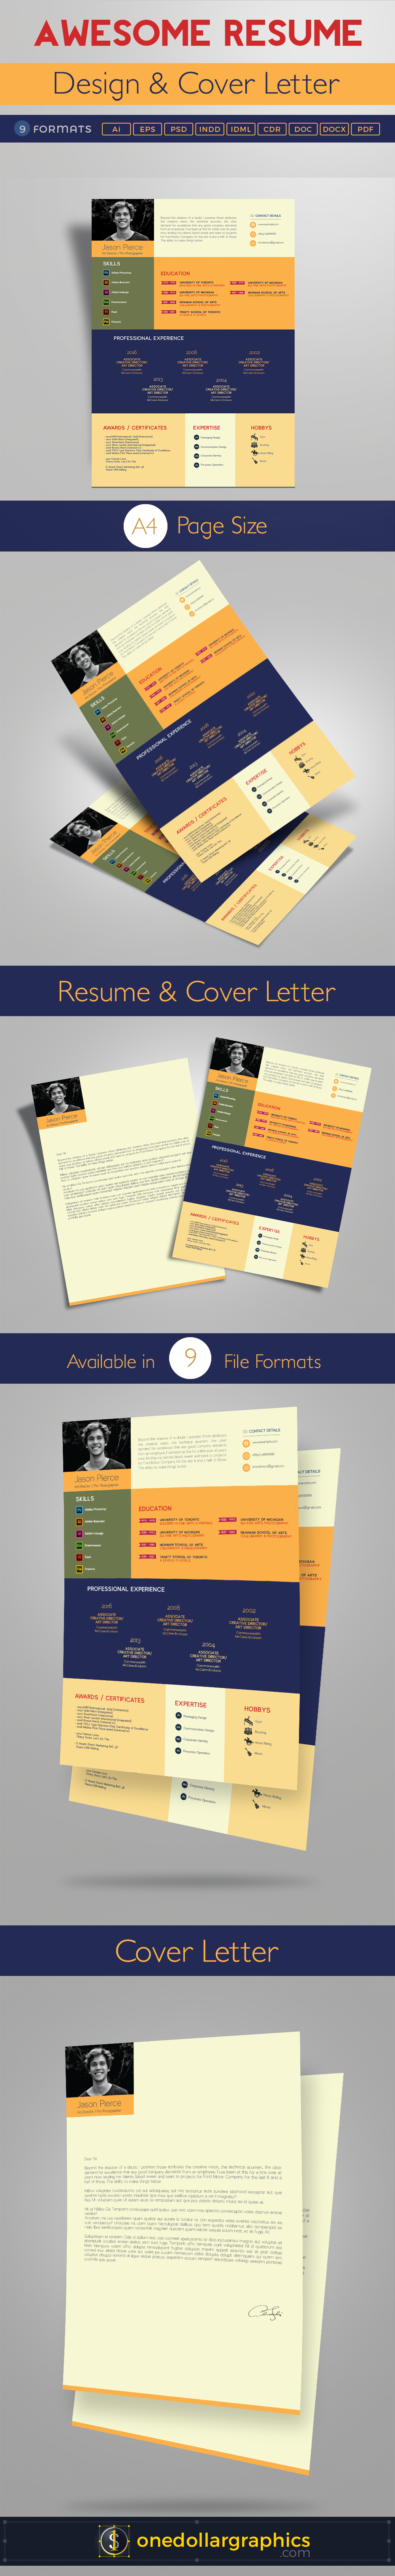 awesome resume  cv  design  cover letter template  4 psd mock